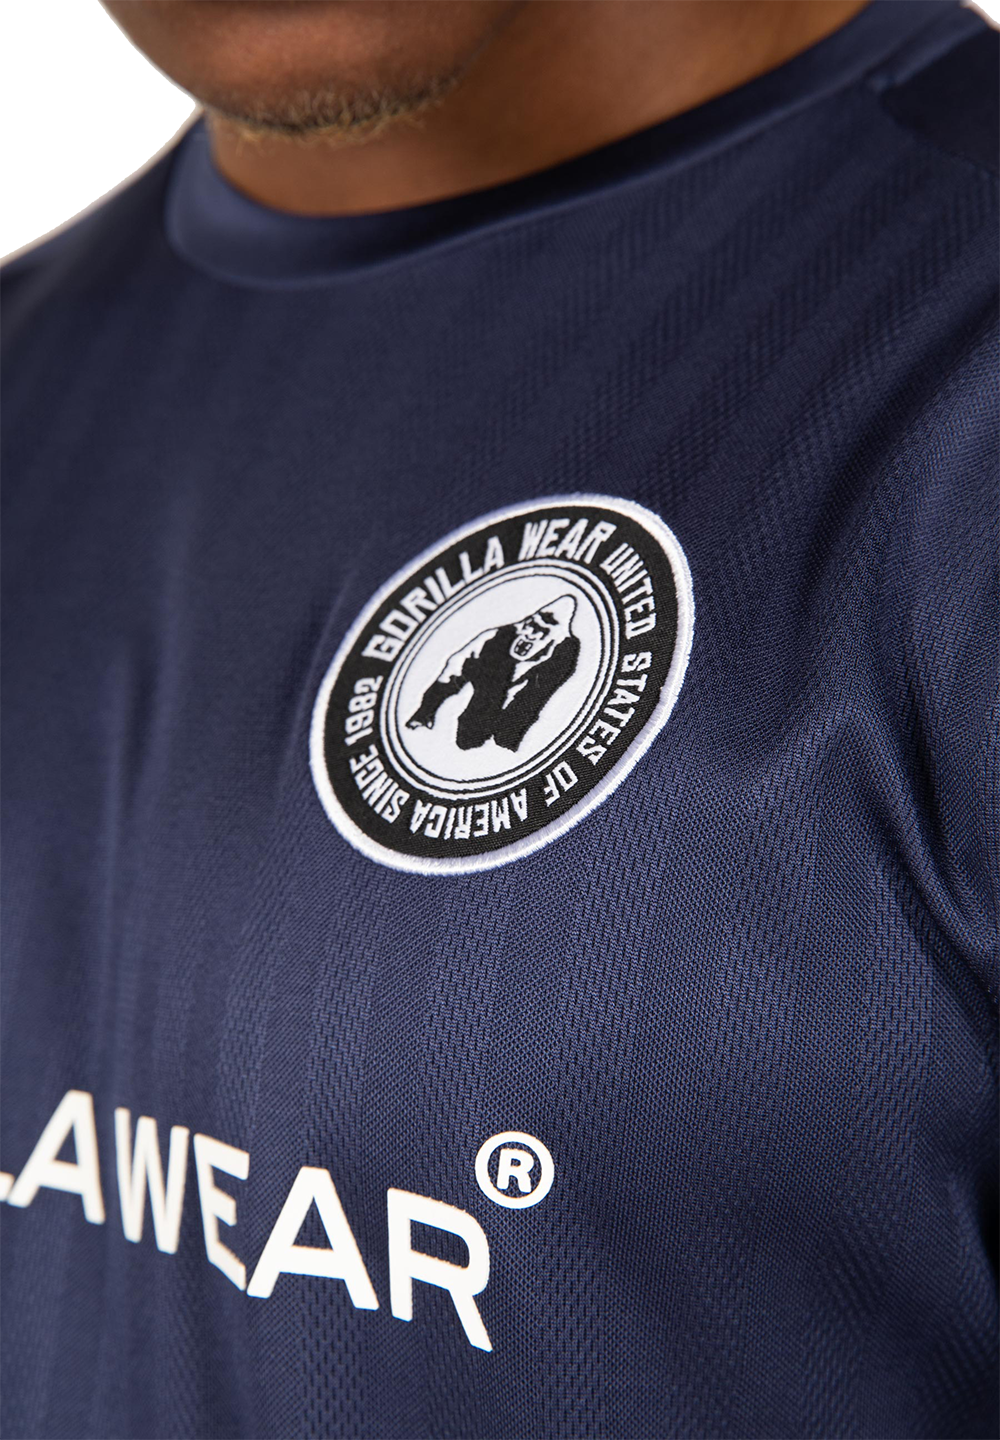 Футболка Stratford T-Shirt – Navy от Gorilla Wear